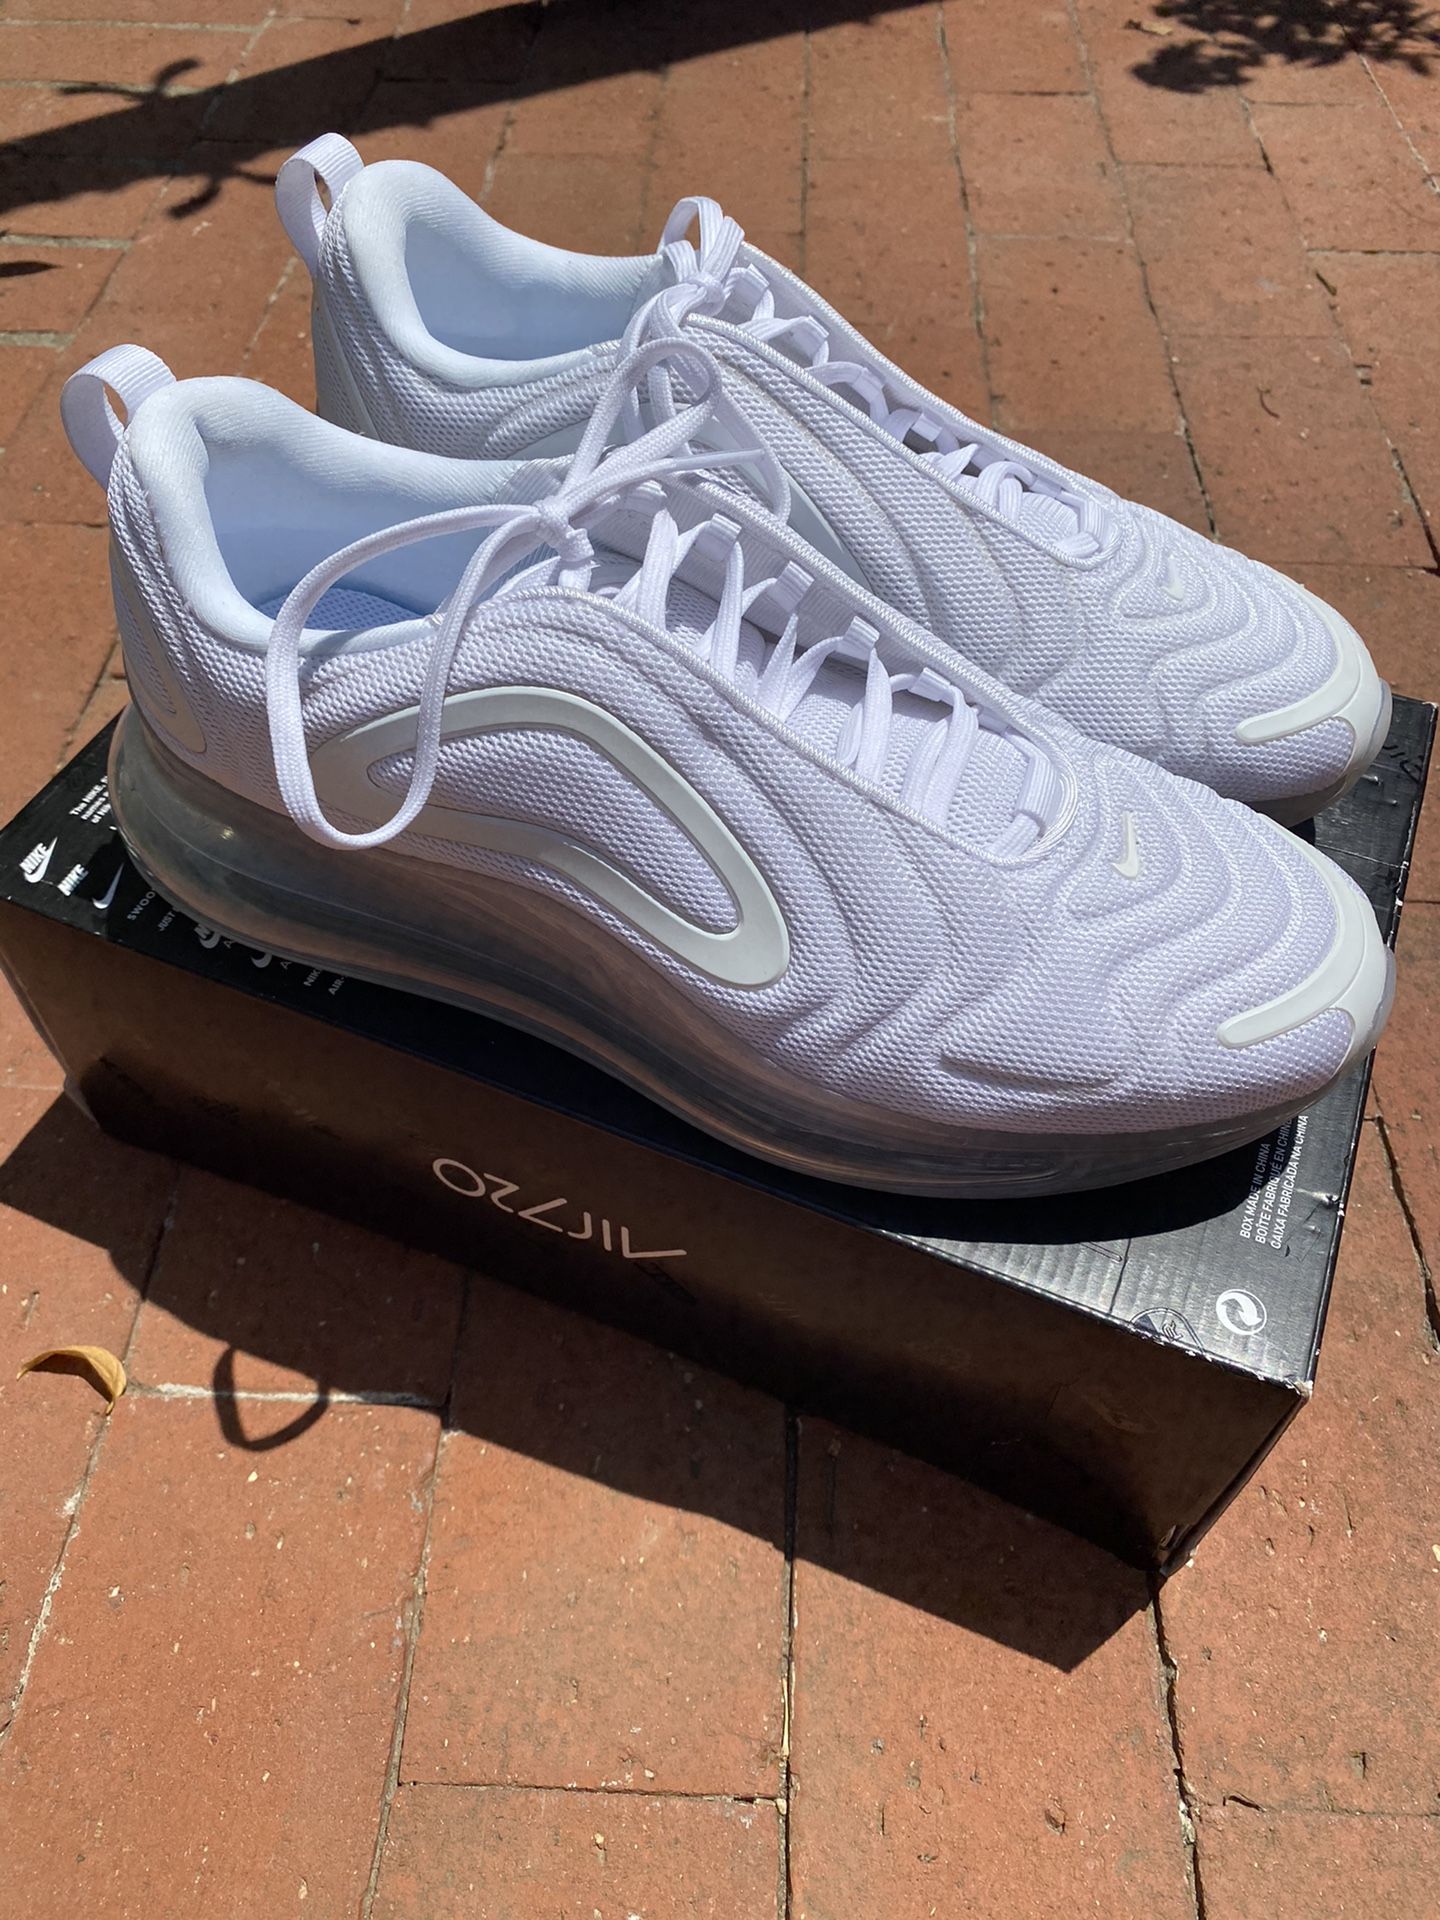 Nike Air Max 720, Men’s size 10.5 in white/platinum